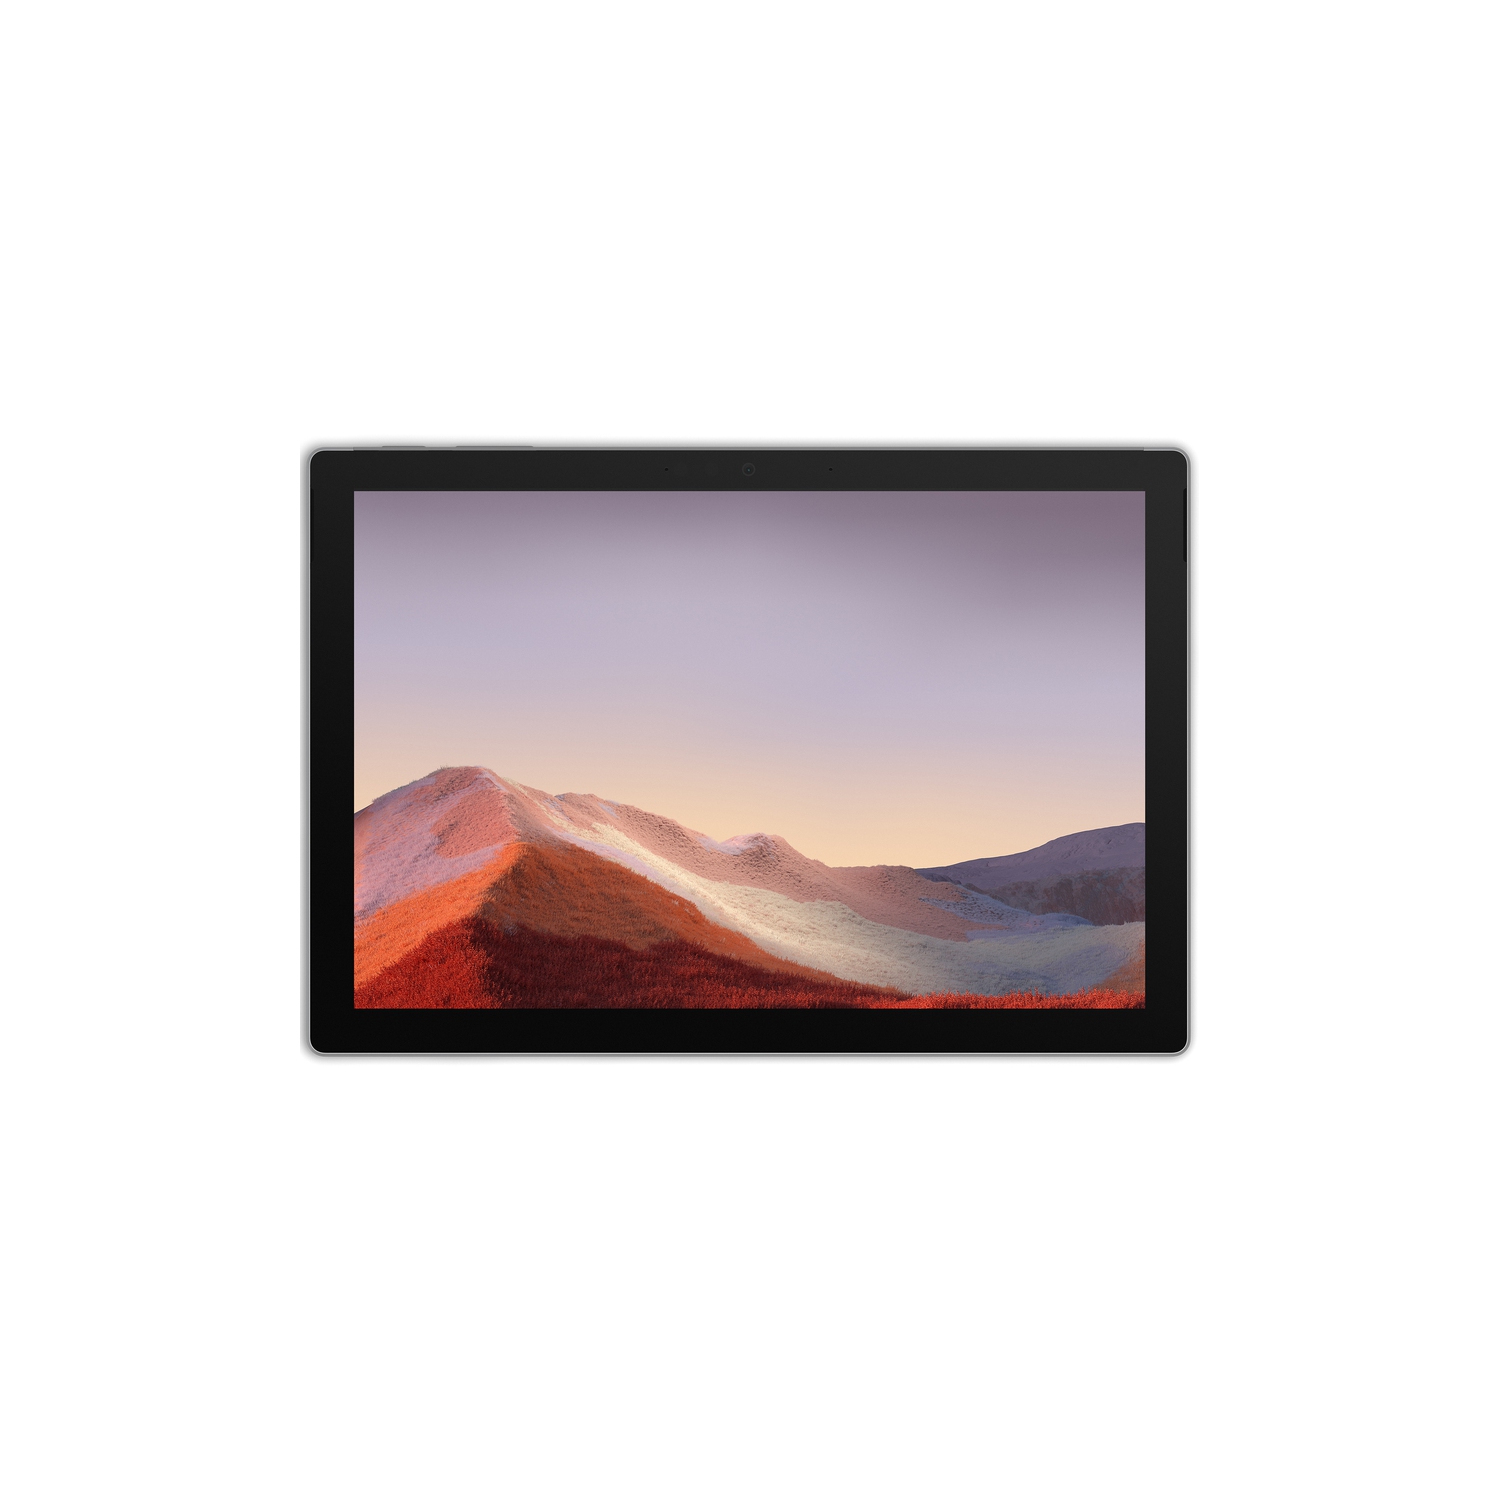 Microsoft Surface Pro 7+ 12.3" 256GB Windows 10 Pro LTE Tablet with Intel Core i5 1135G7 Processor - Platinum - (1S4-00001)